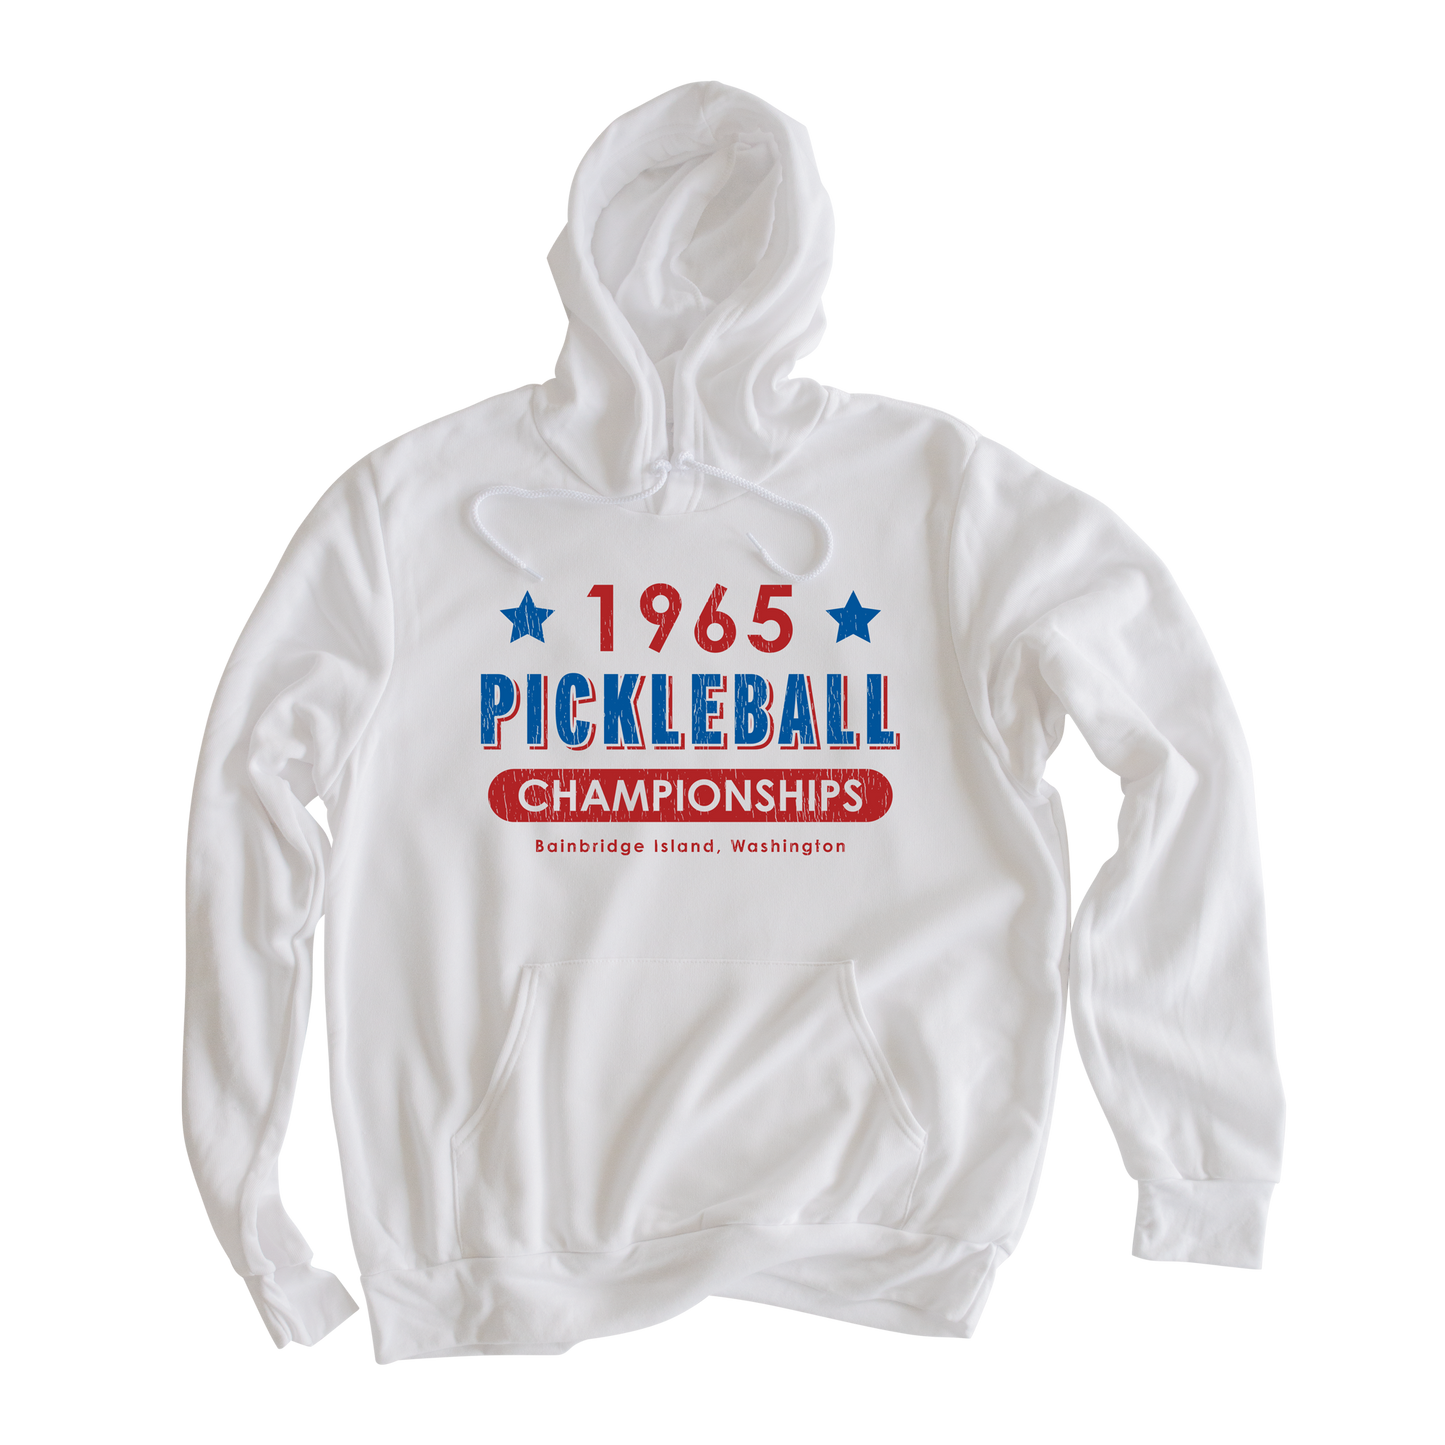 1965 Pickleball Championships Hooded Sweatshirt